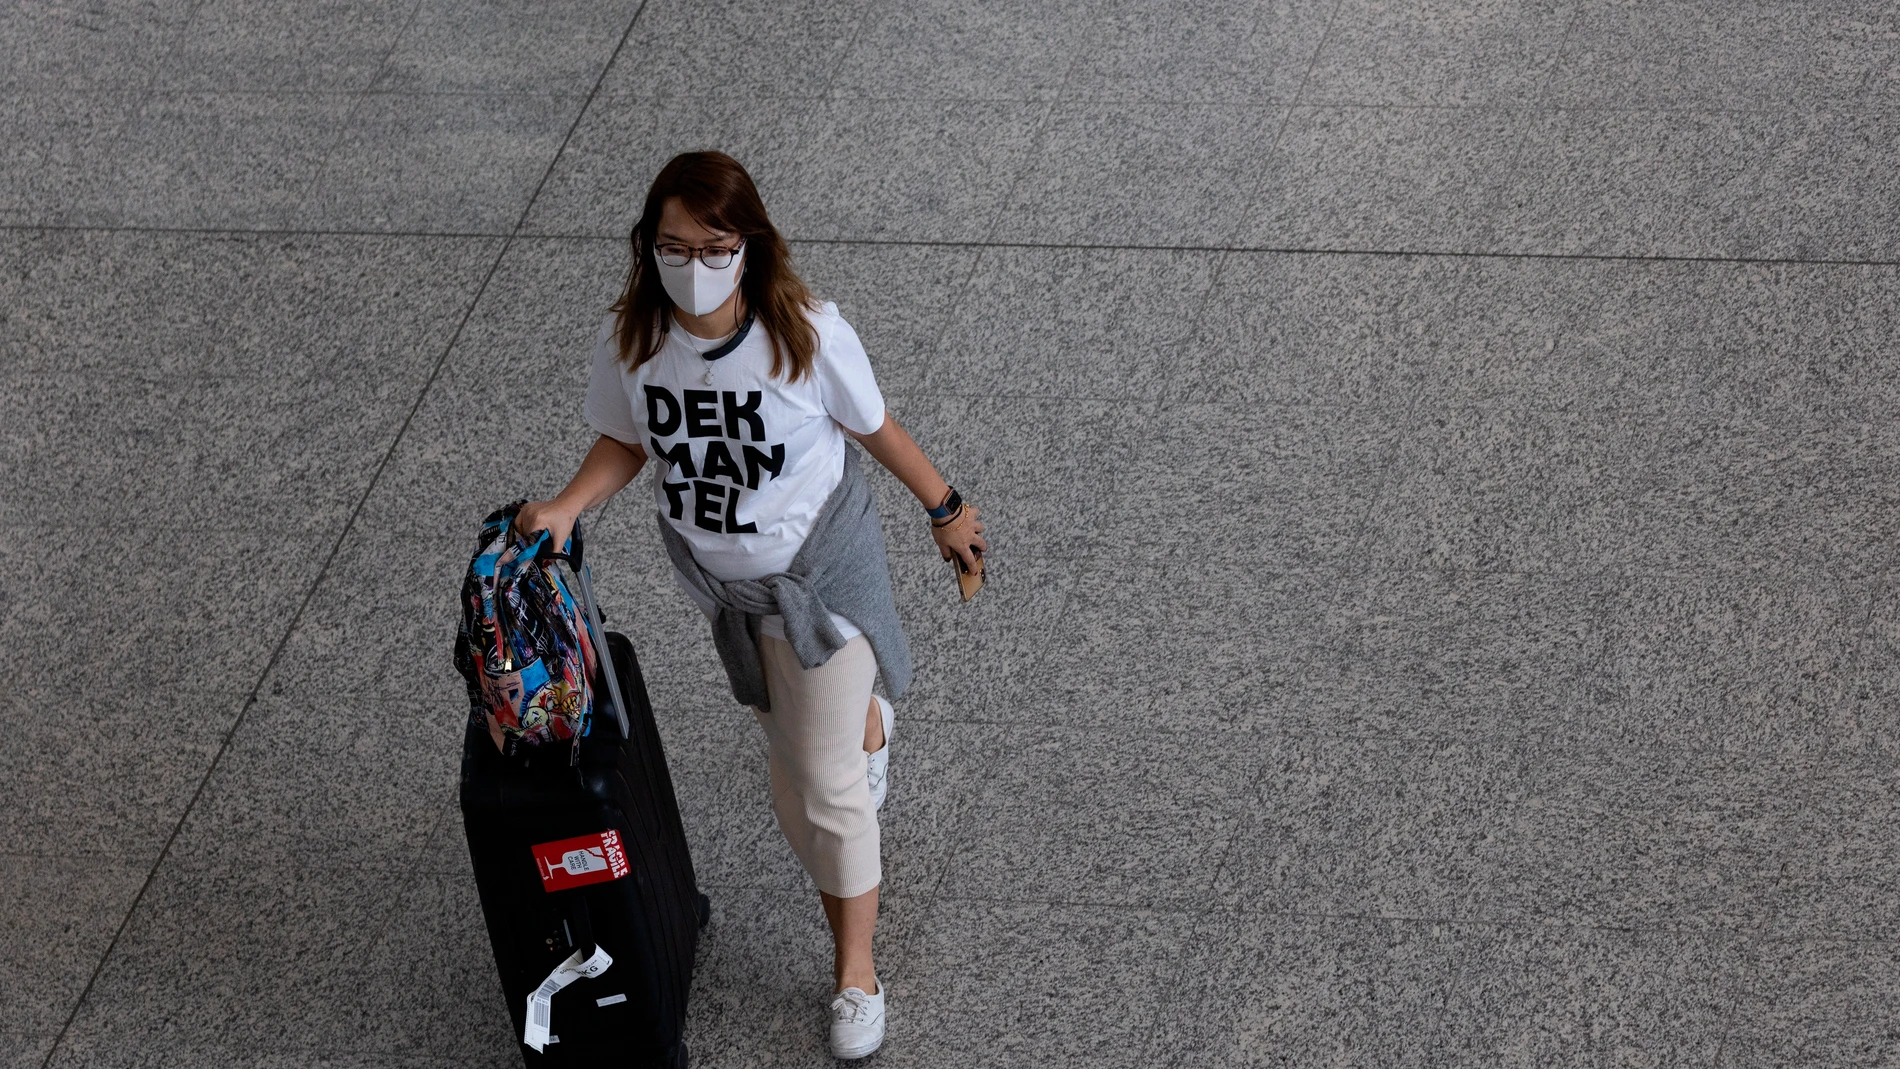 Una mujer con una mascarilla desplazándose con una maleta